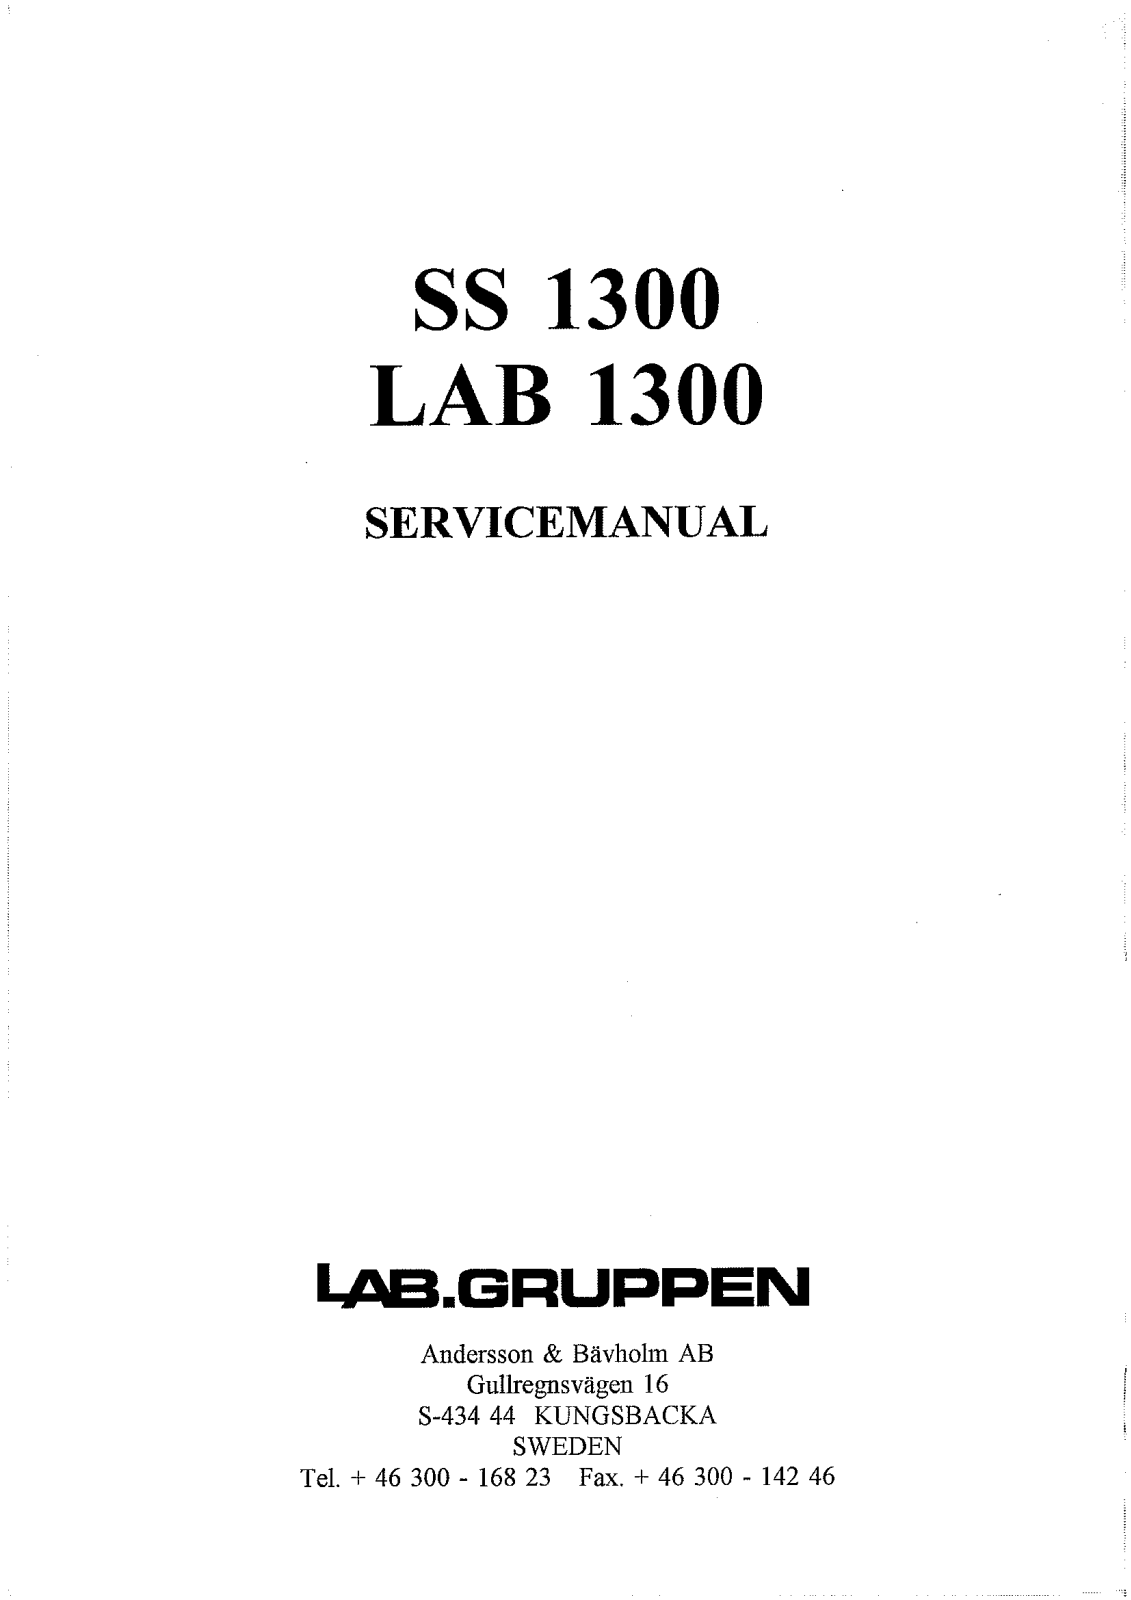 LabGruppen 1300c, LAB1300C, SS1300 Service Manual